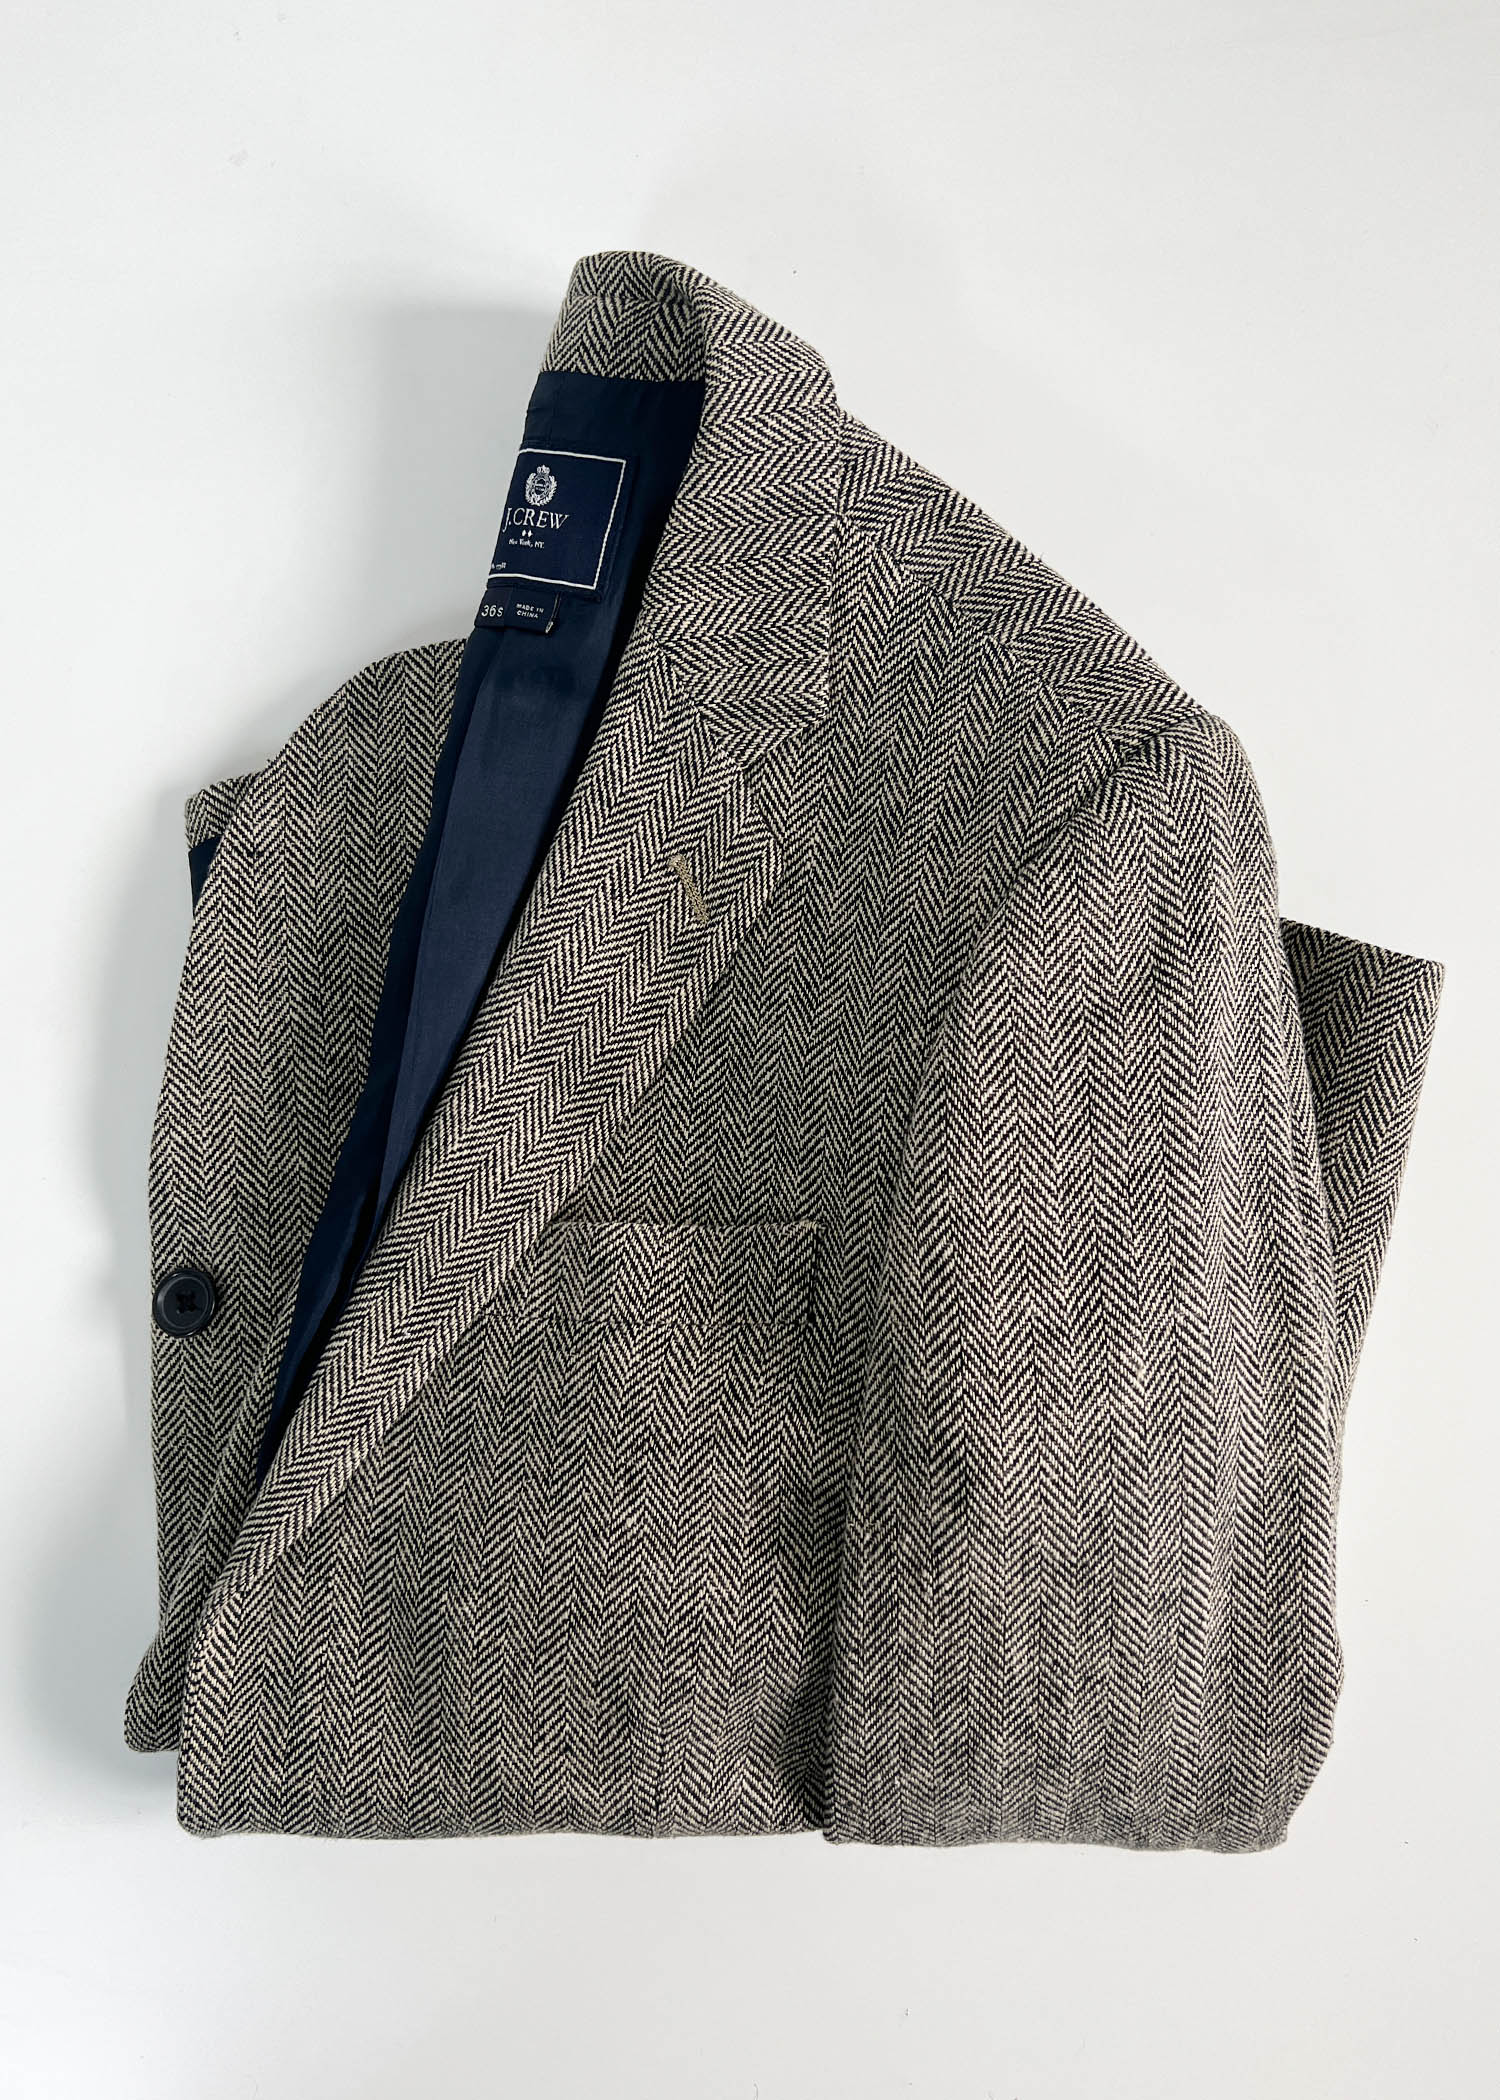 J.CREW herringbone linen blend jacket